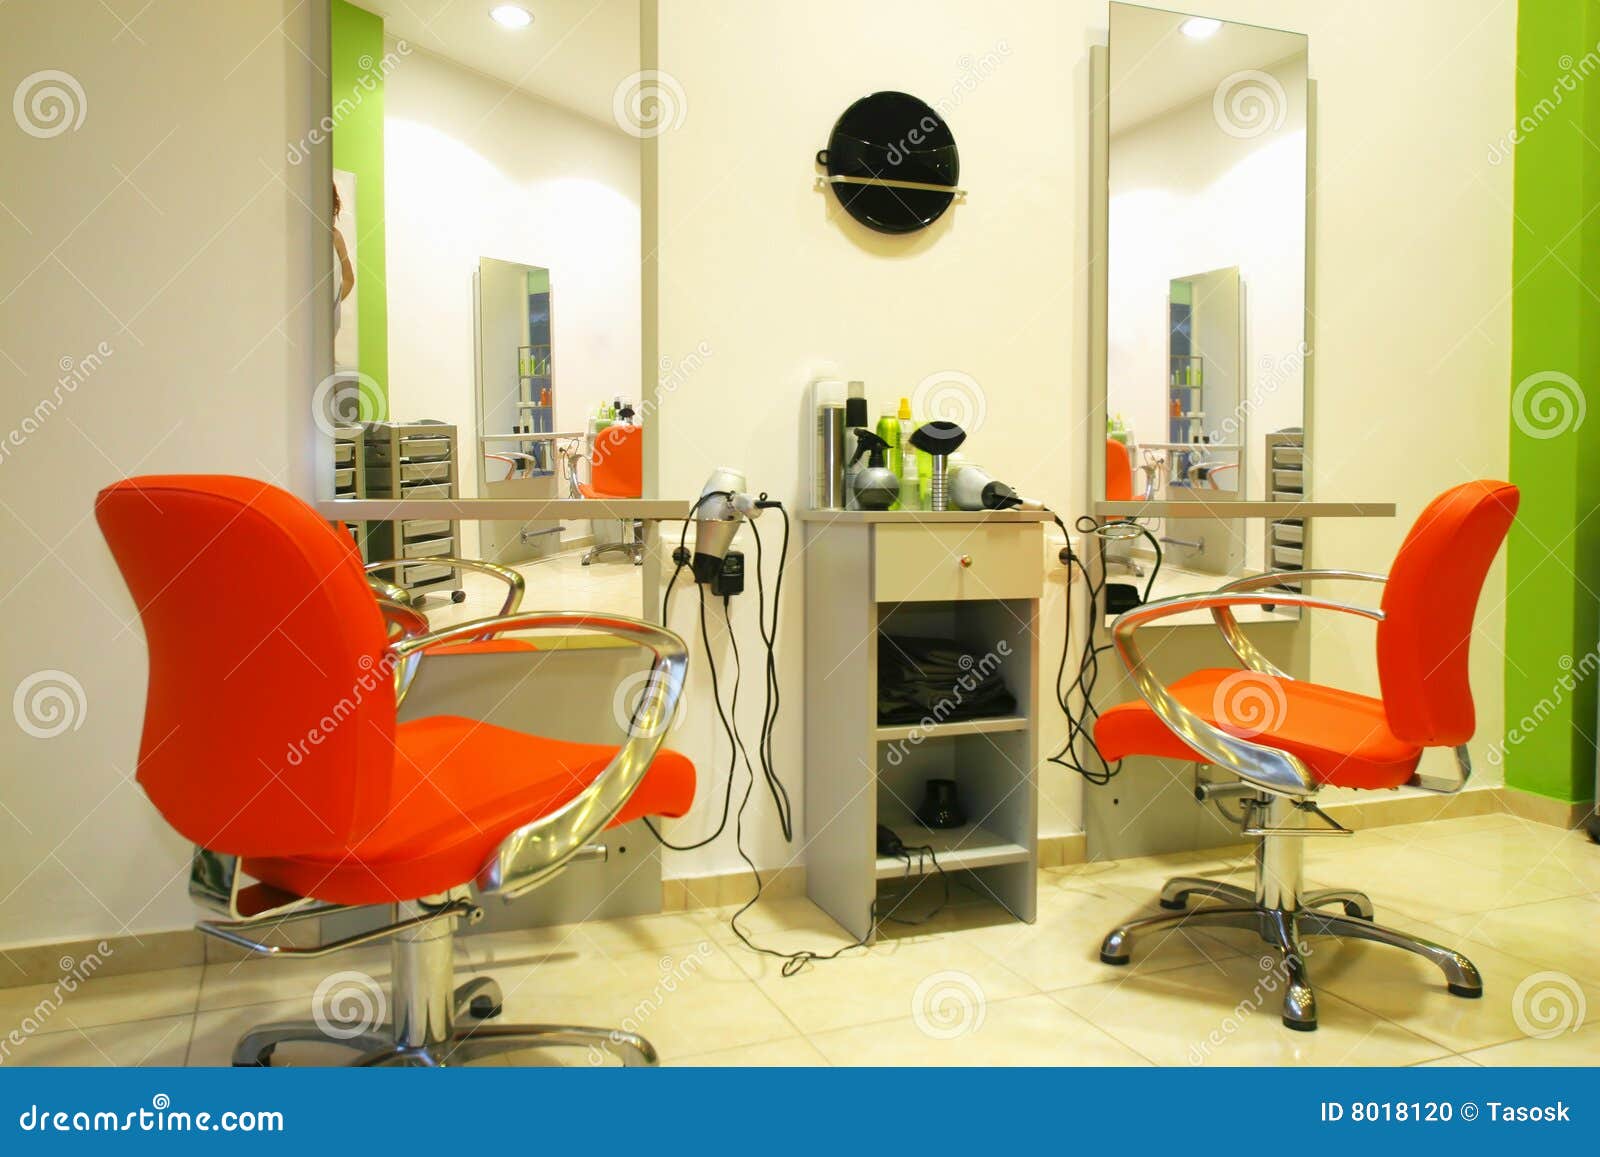 hairdressing studio